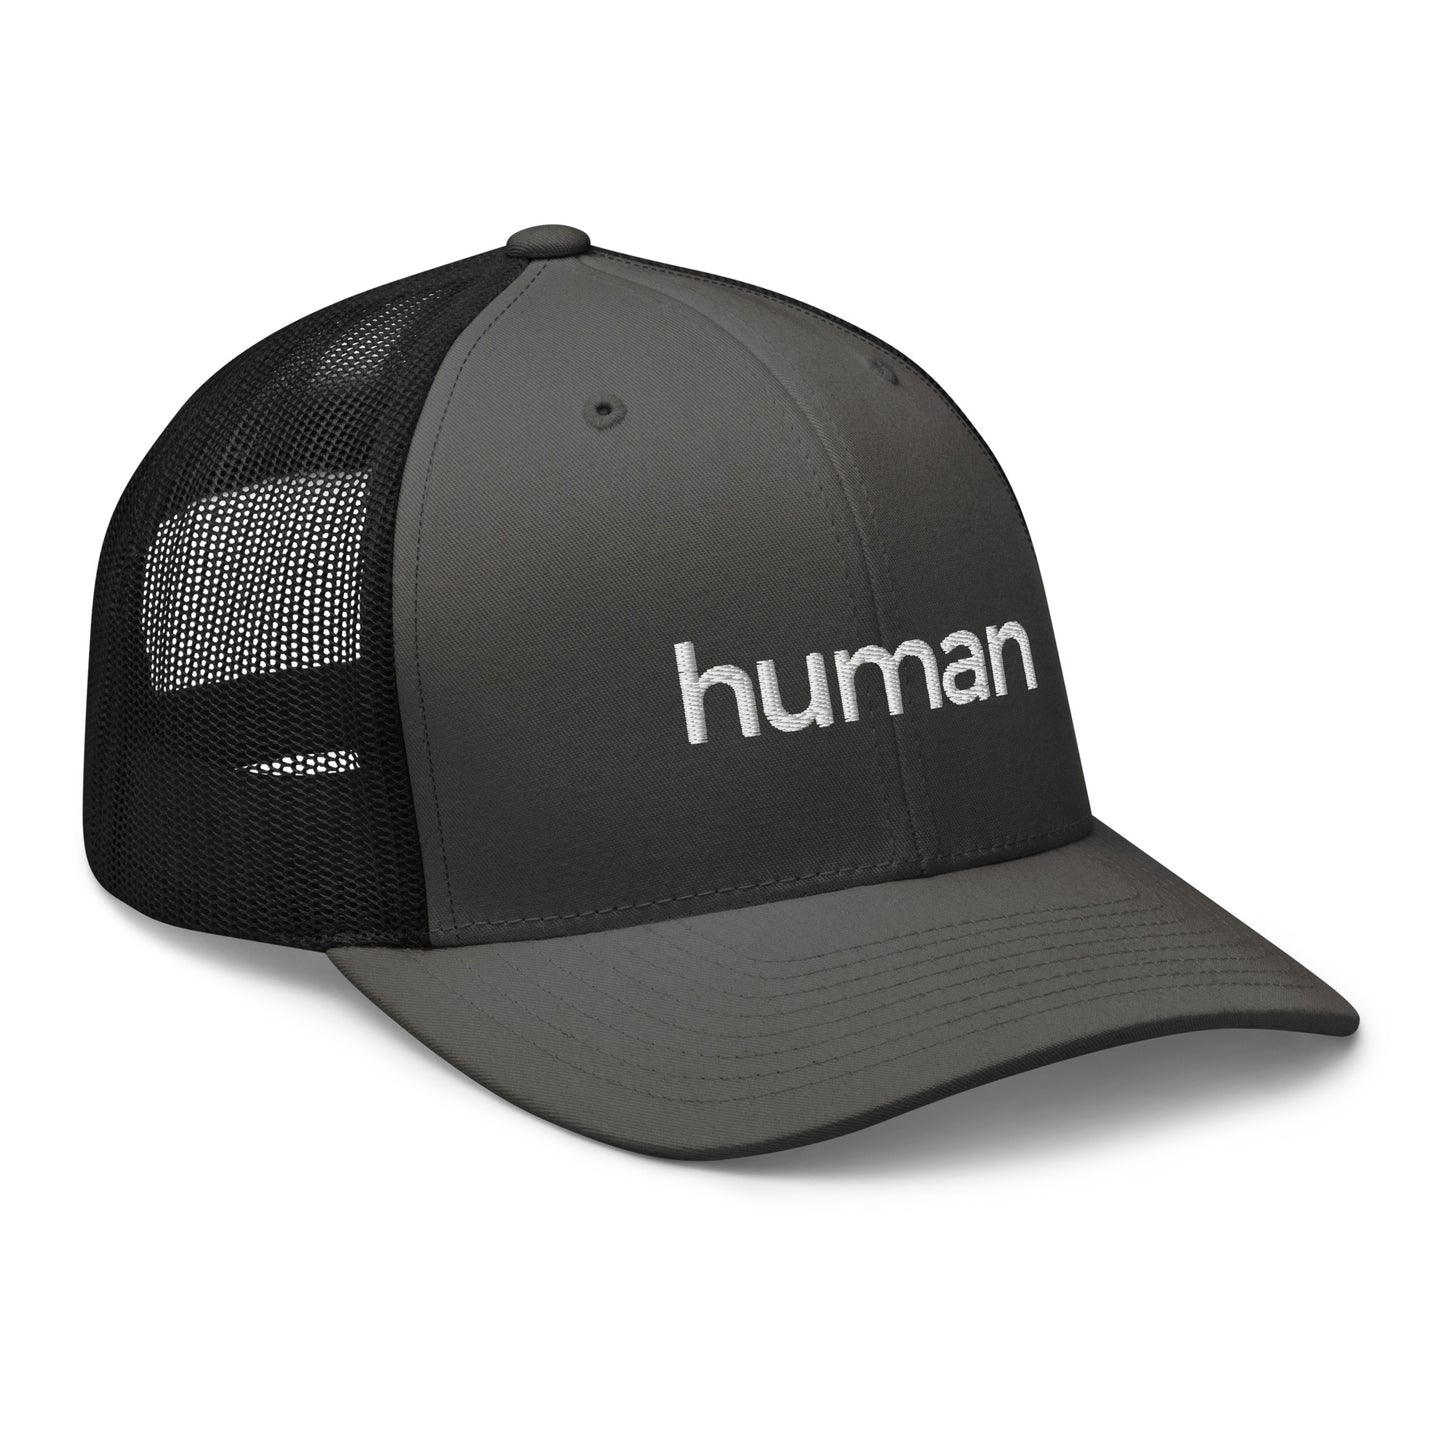 Human - Trucker Cap